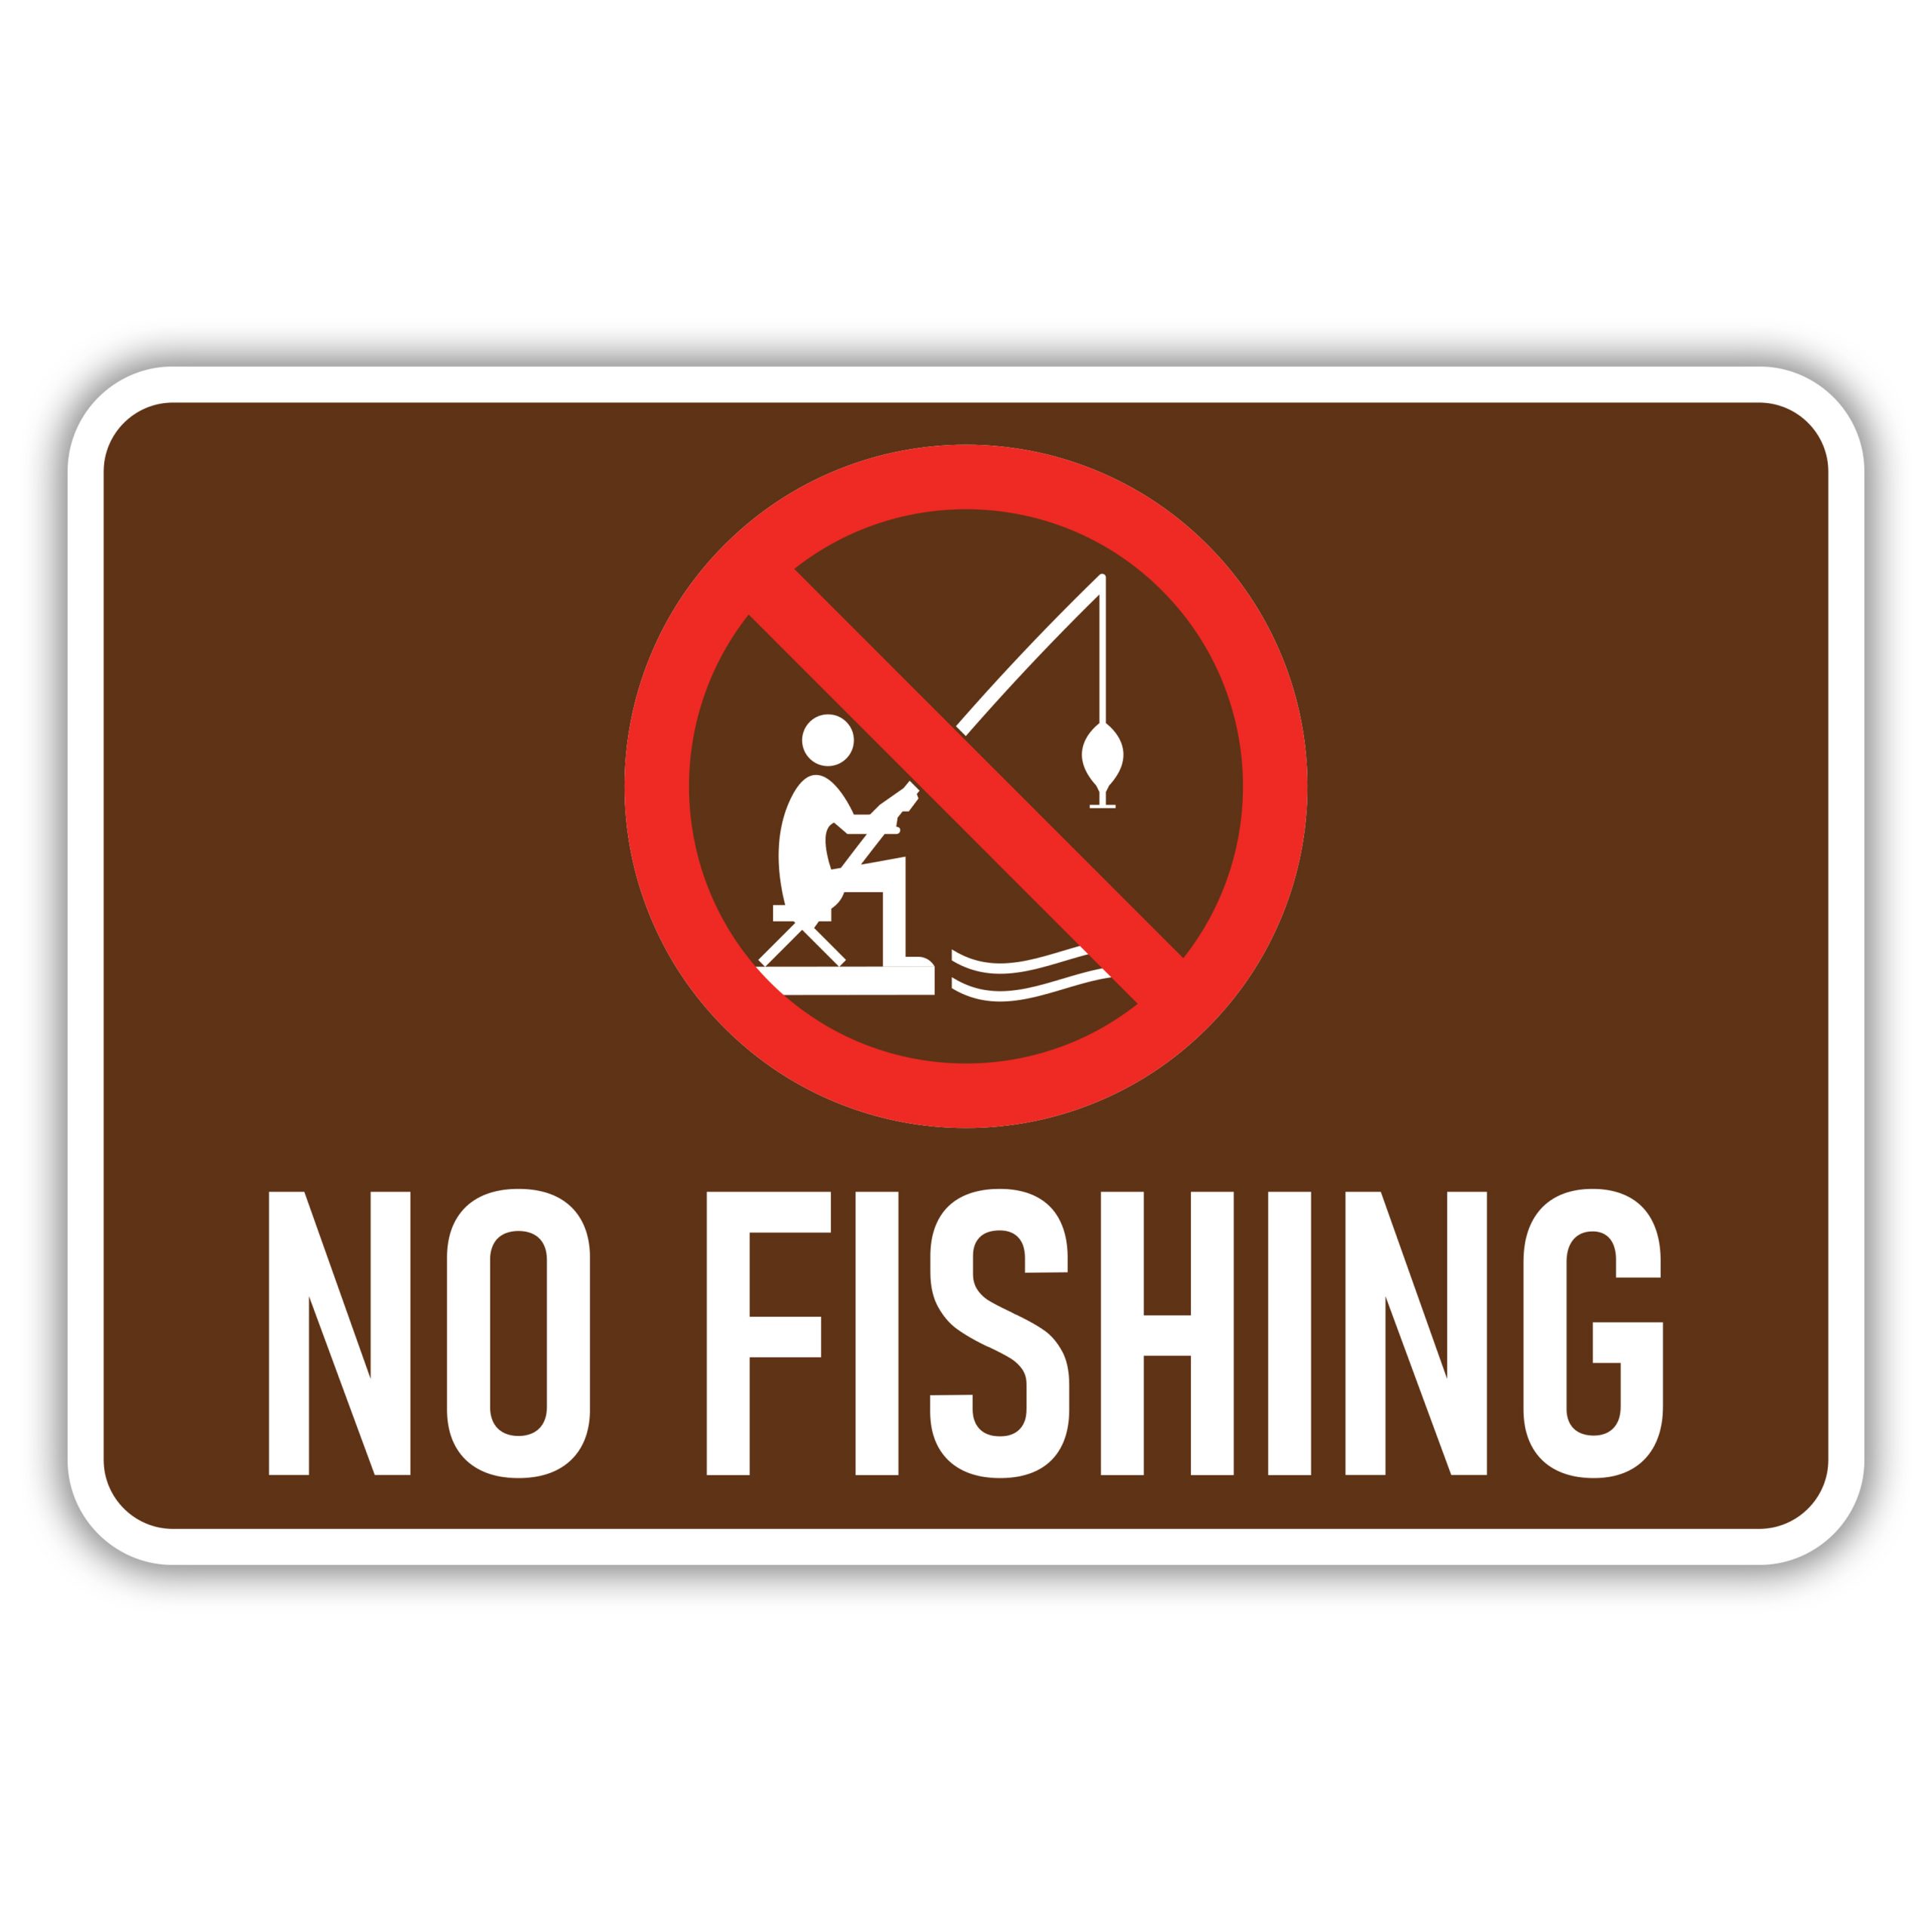 NO FISHING - American Sign Company